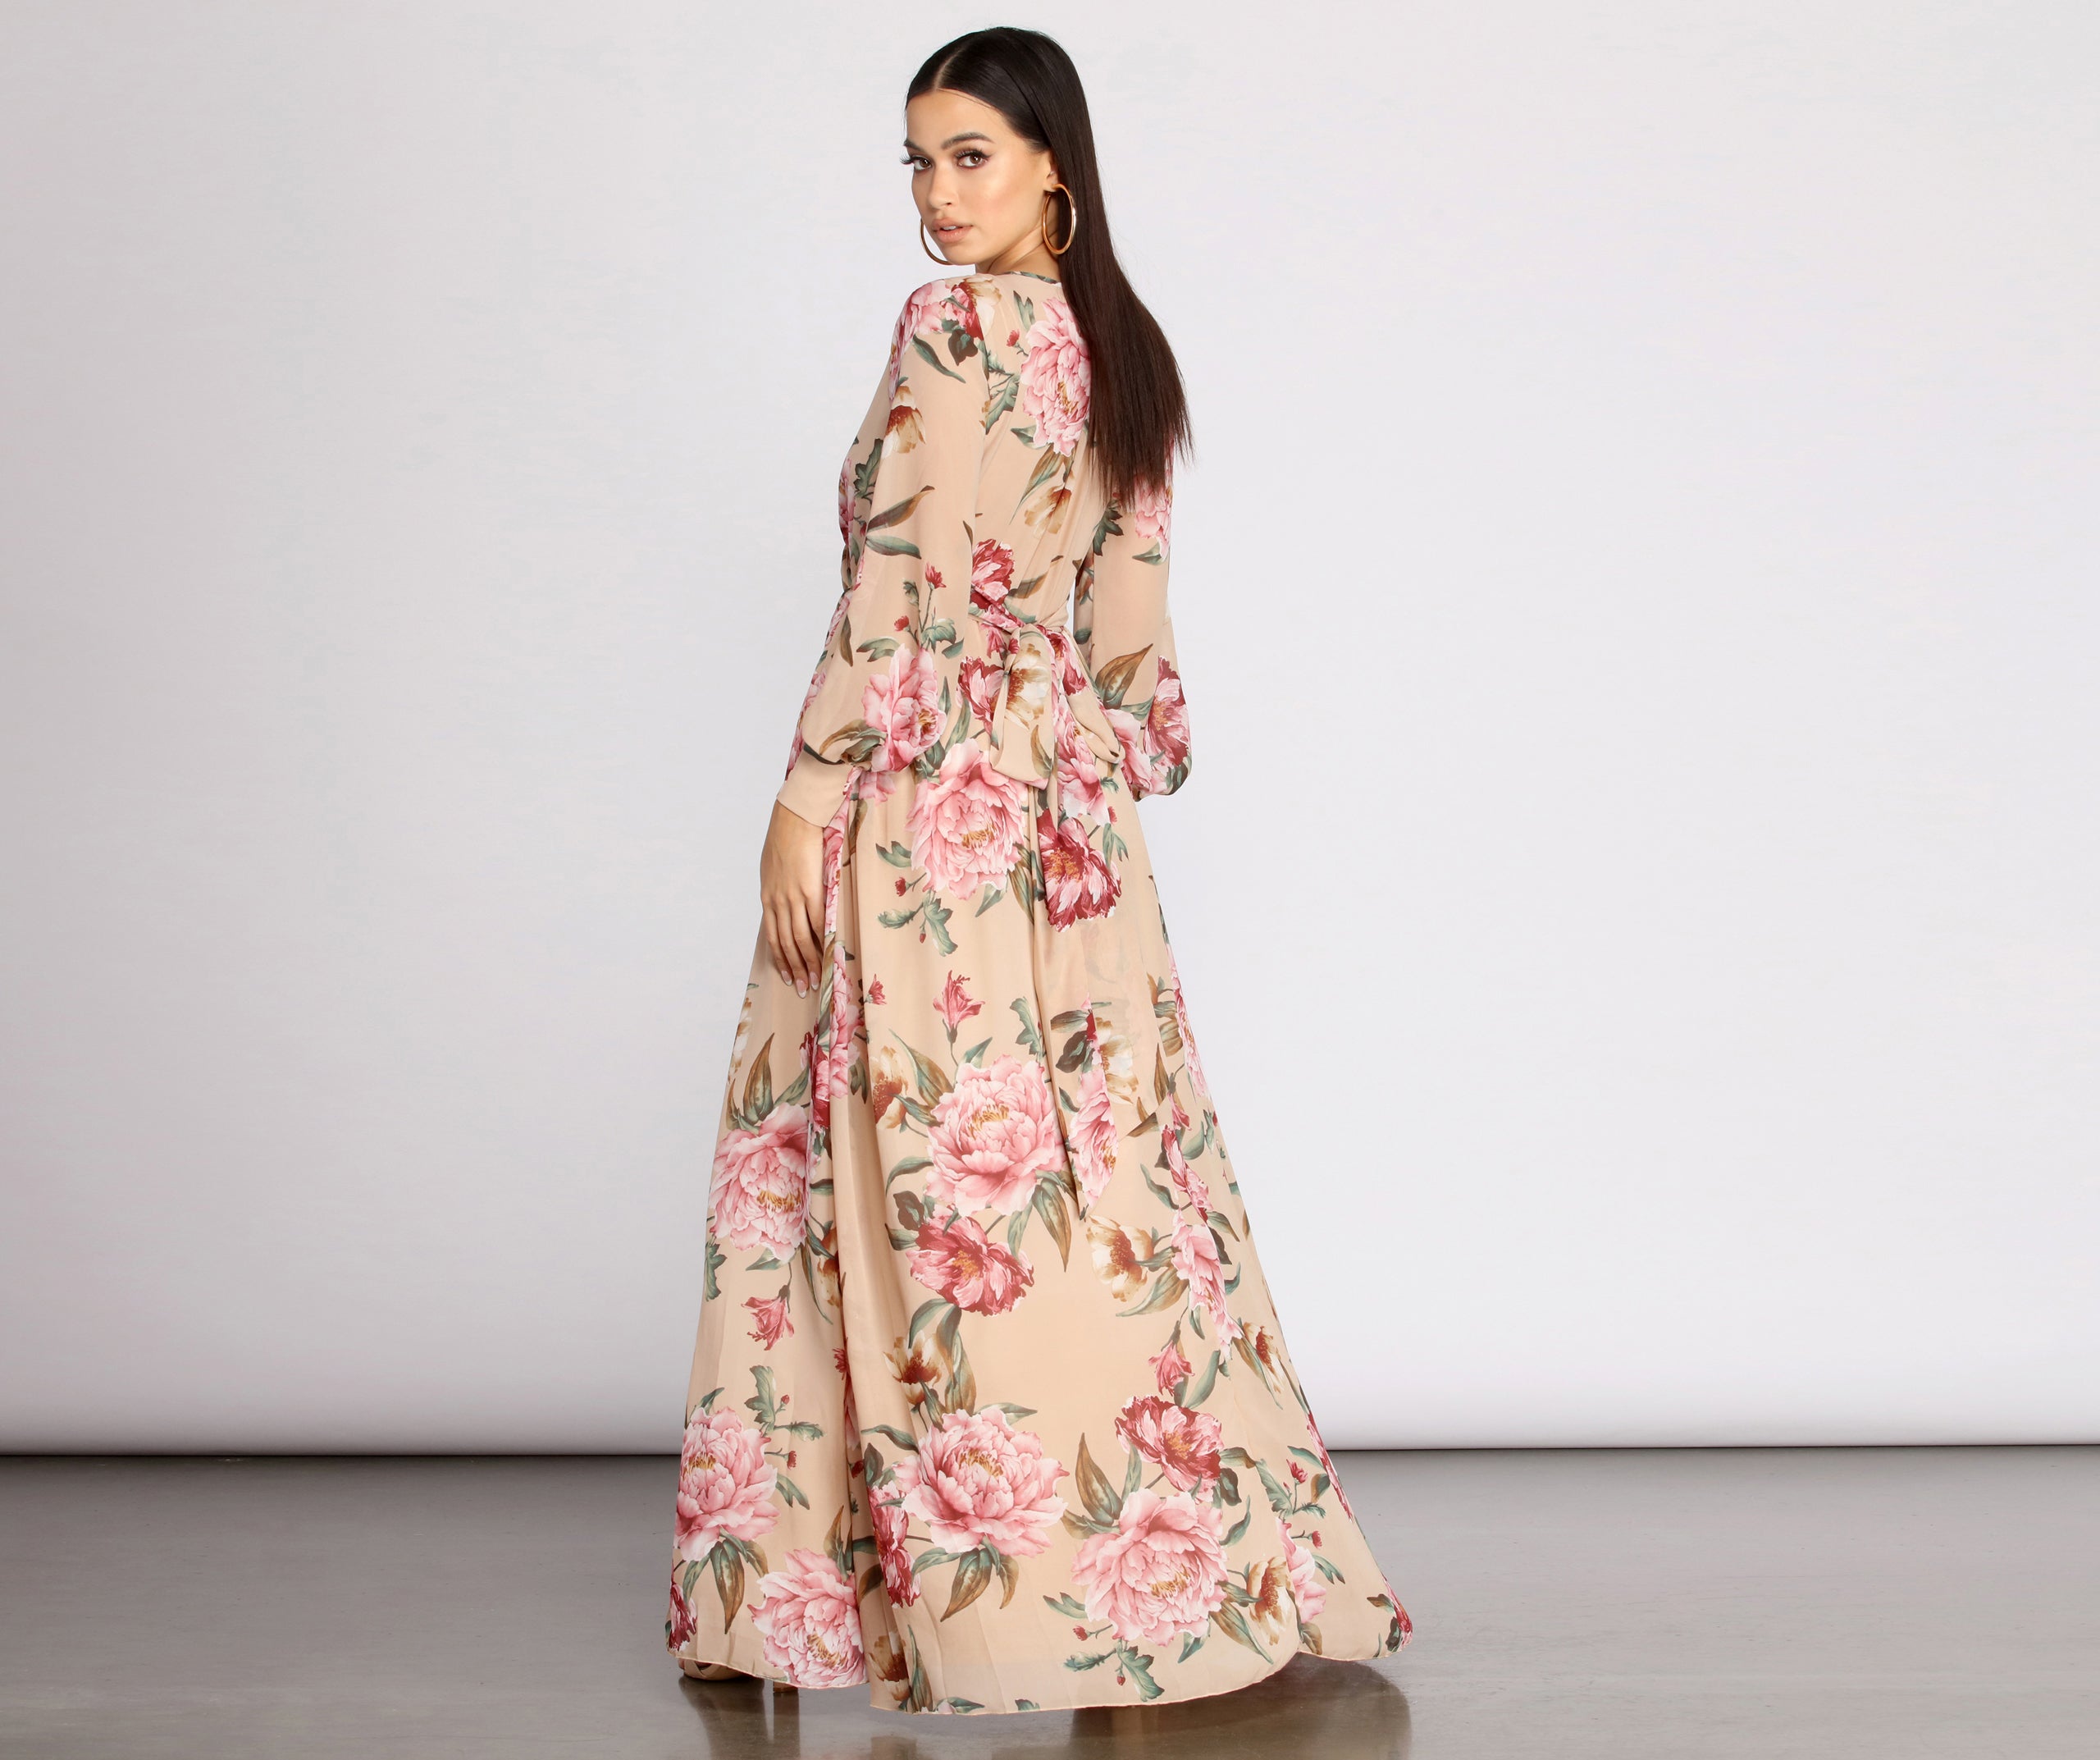 Caralisa Floral Chiffon High Slit Dress